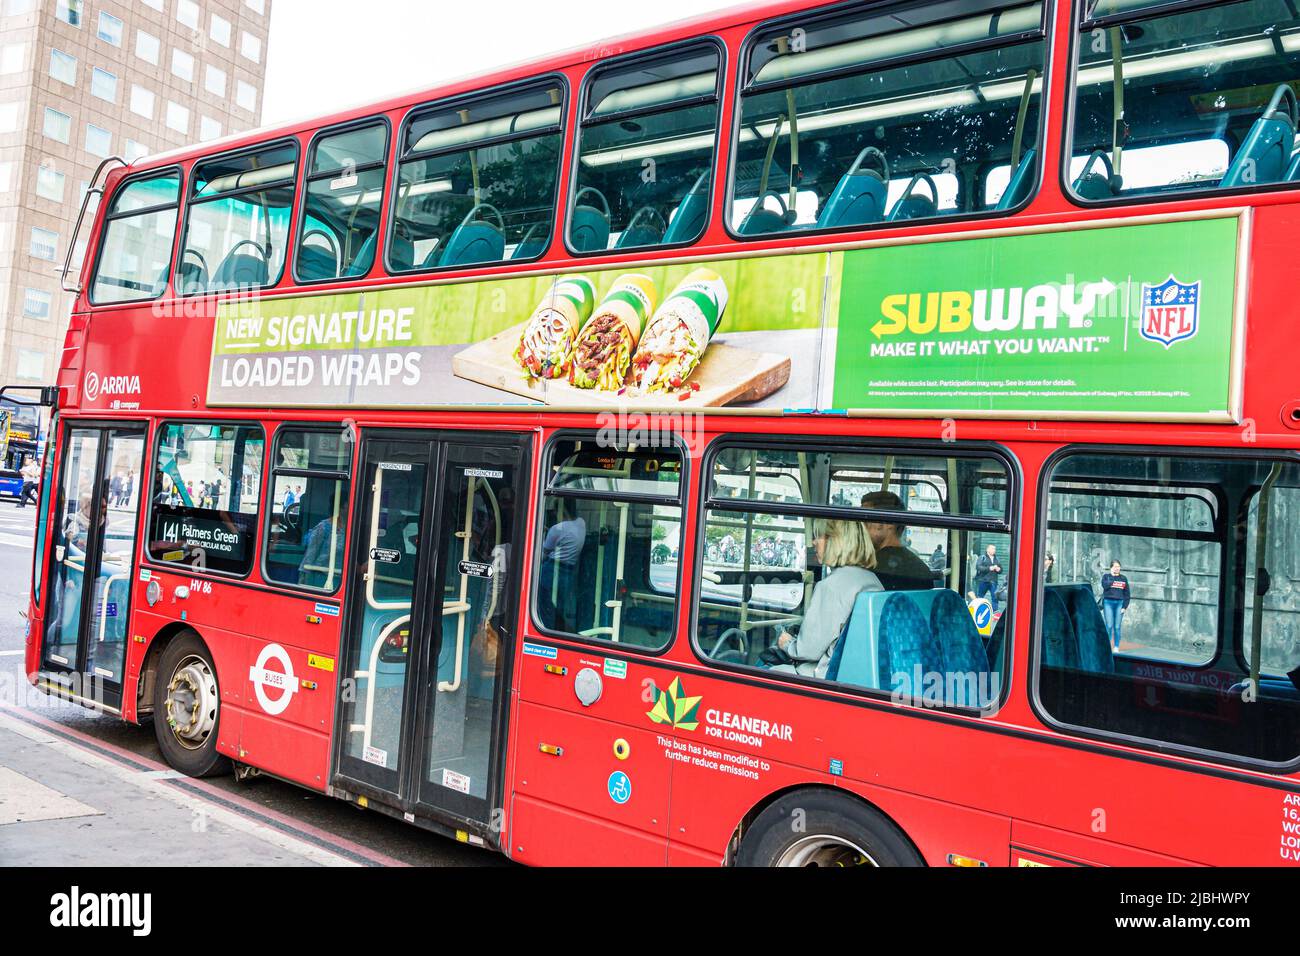 London England,South Bank Southwark,Subway sandwich shop,ad advertising red double-decker bus public transportation Stock Photo